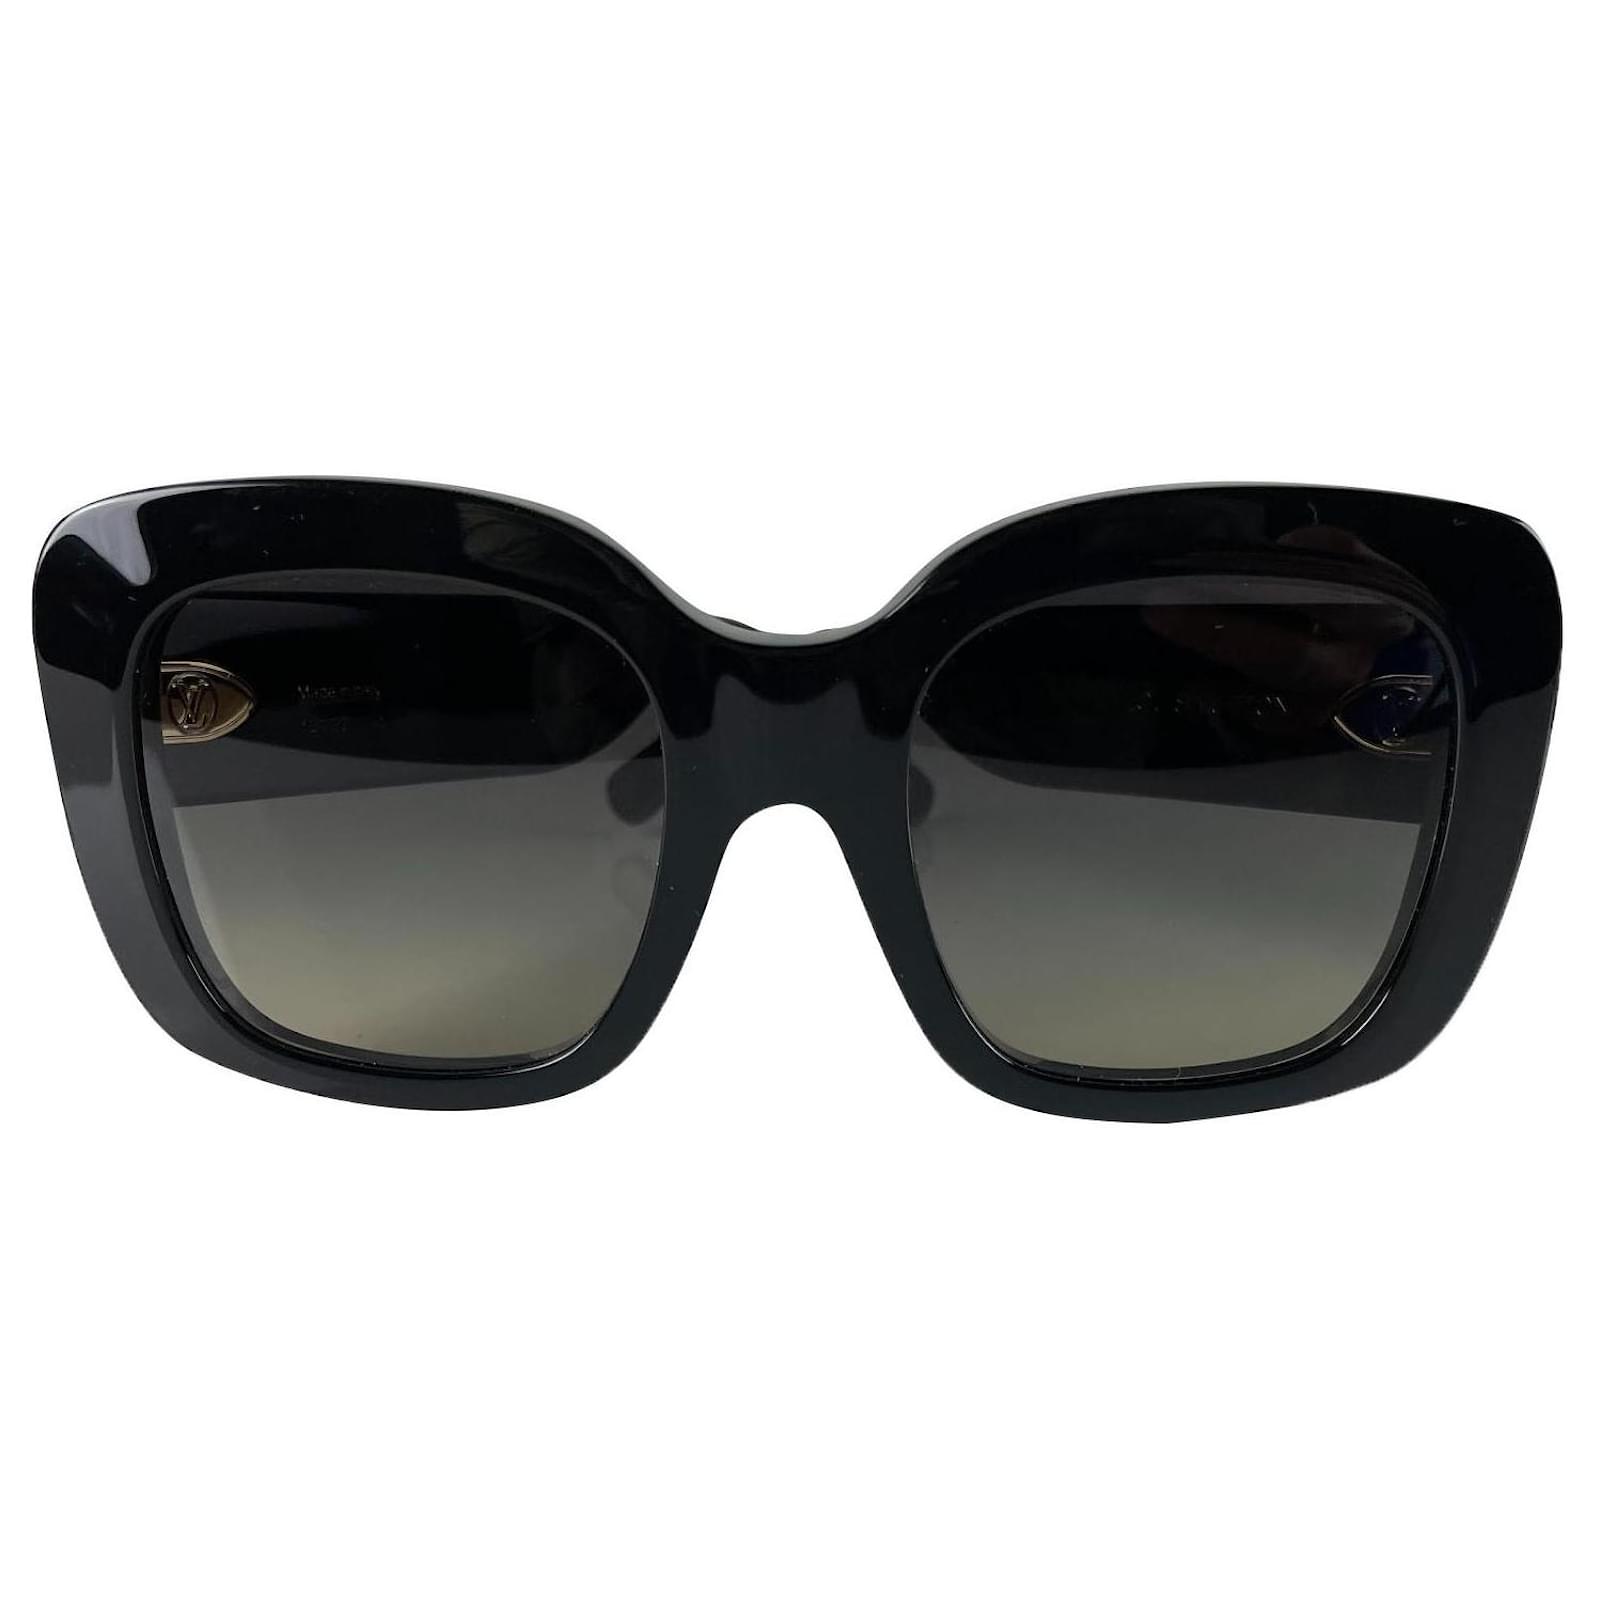 Louis Vuitton - LV Empreinte Square Sunglasses - Acetate - Black - Women - Luxury